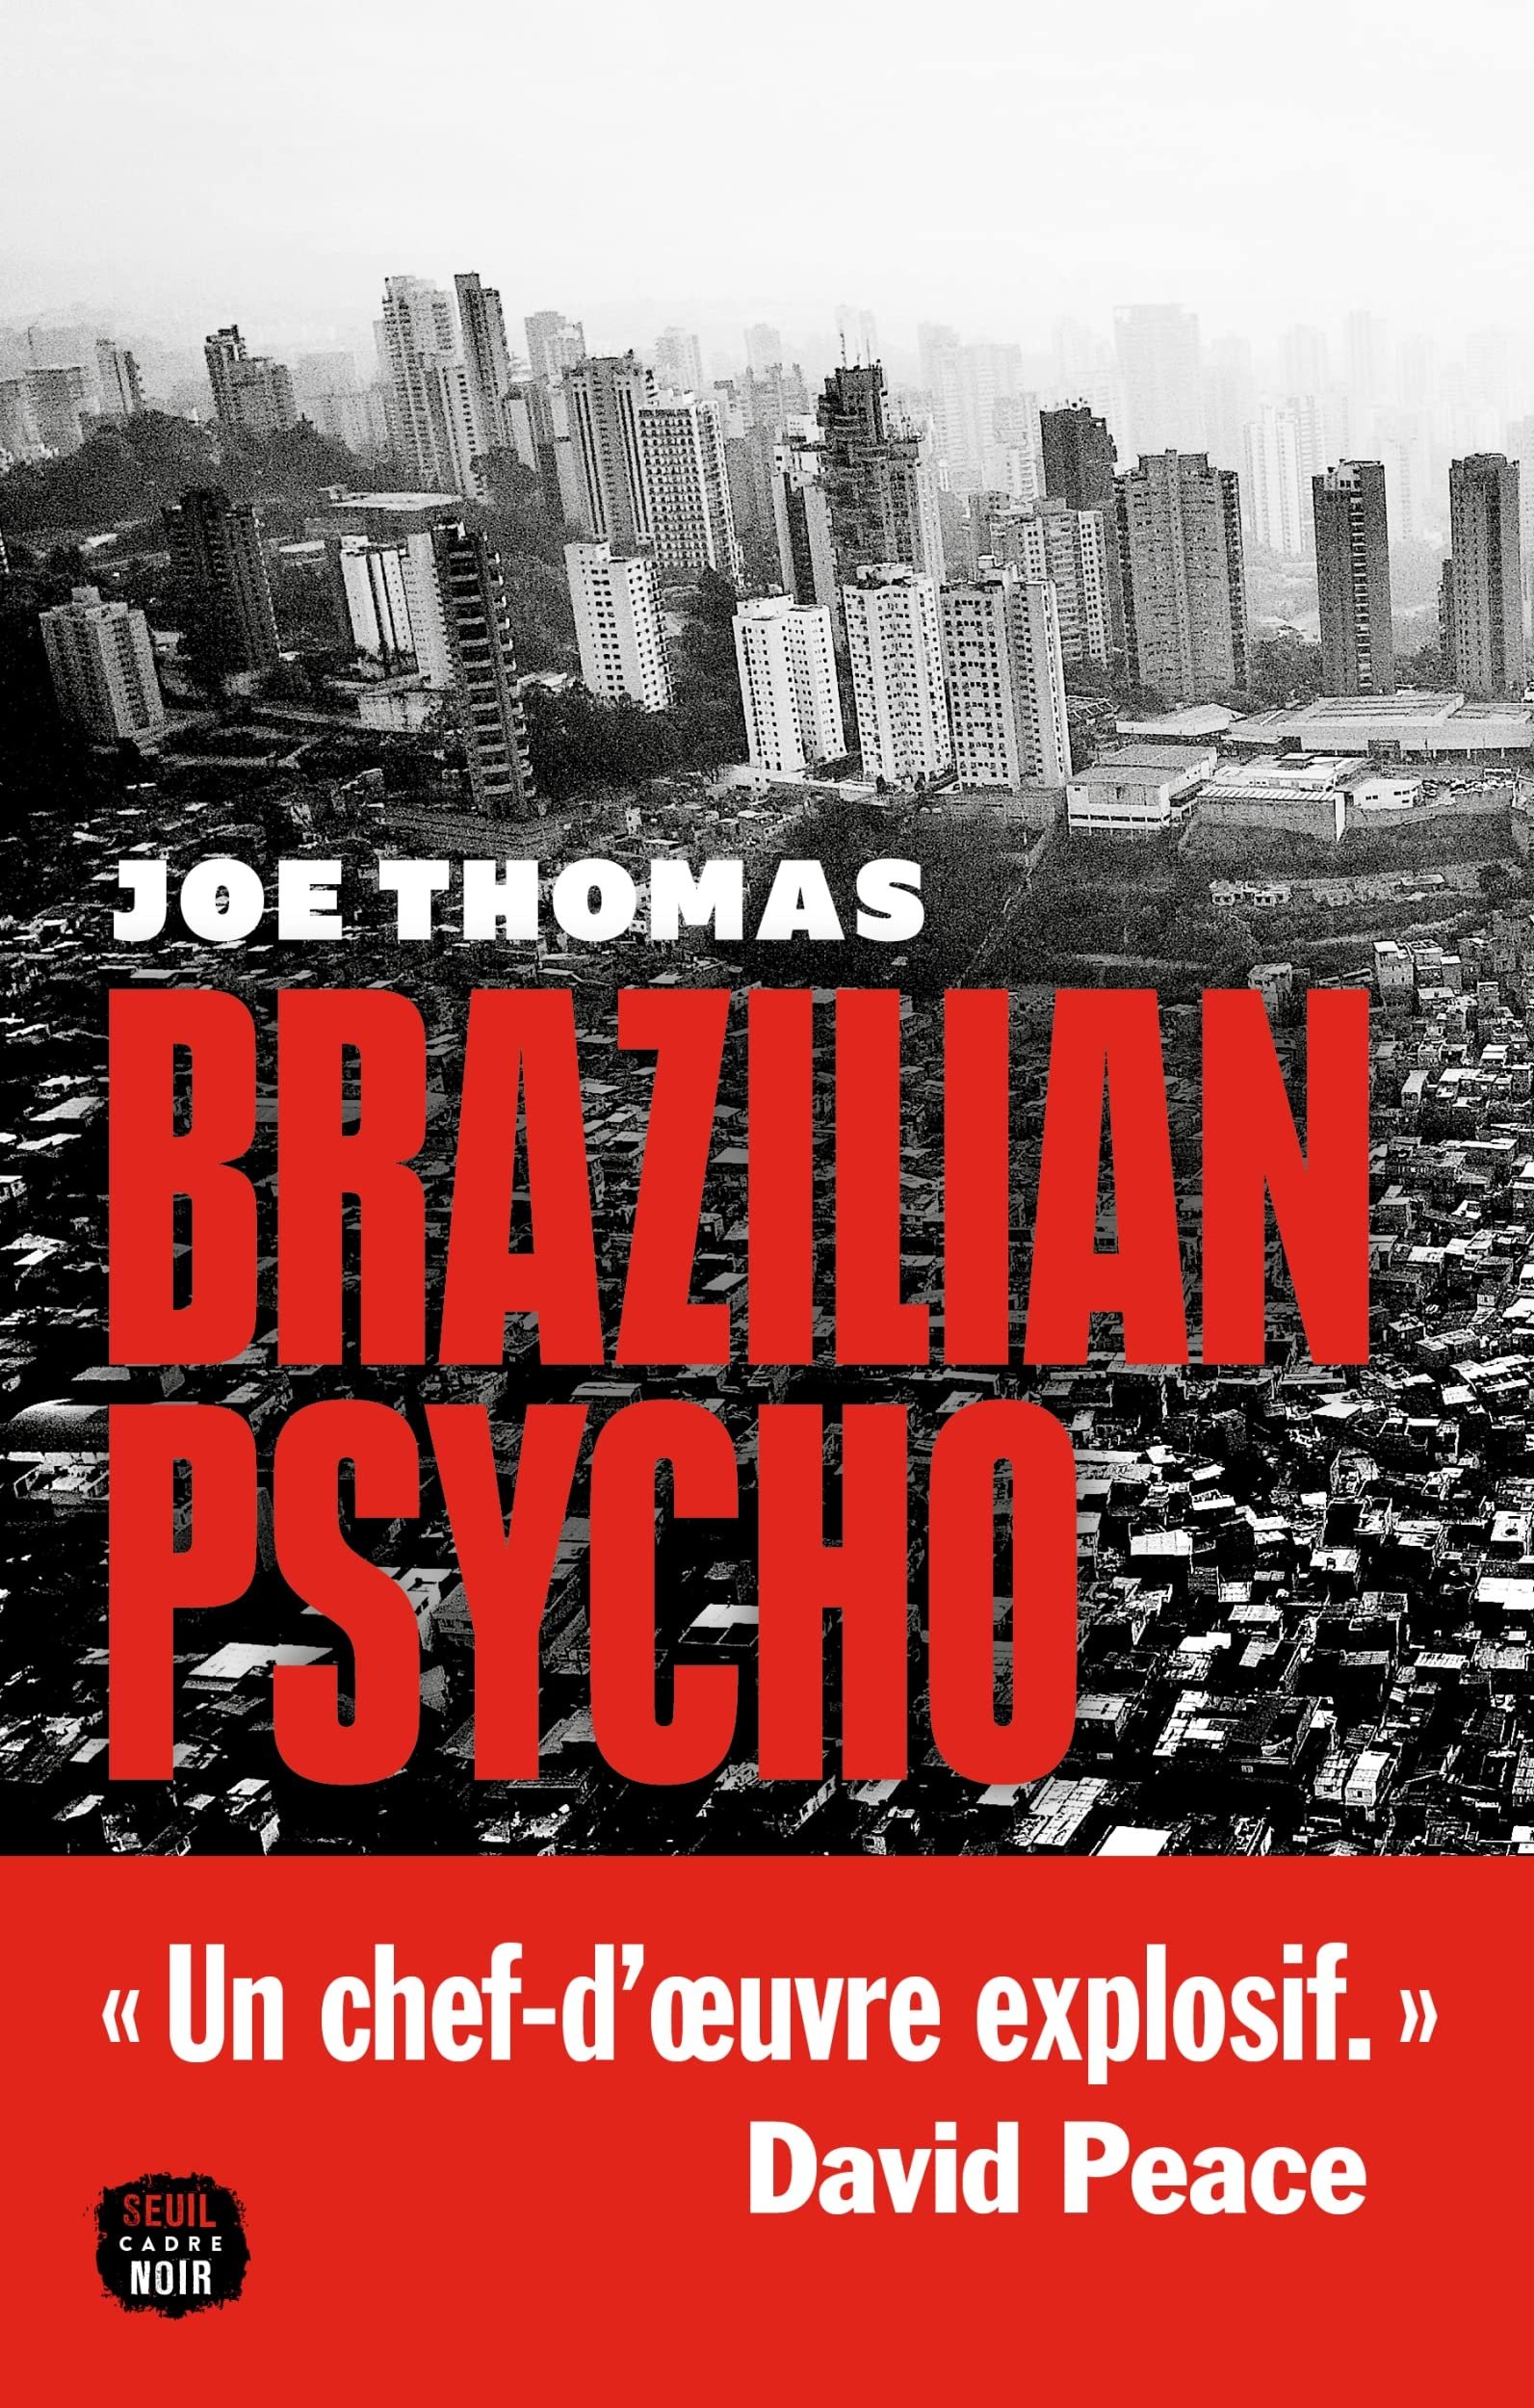 Joe Thomas – Brazilian Psycho